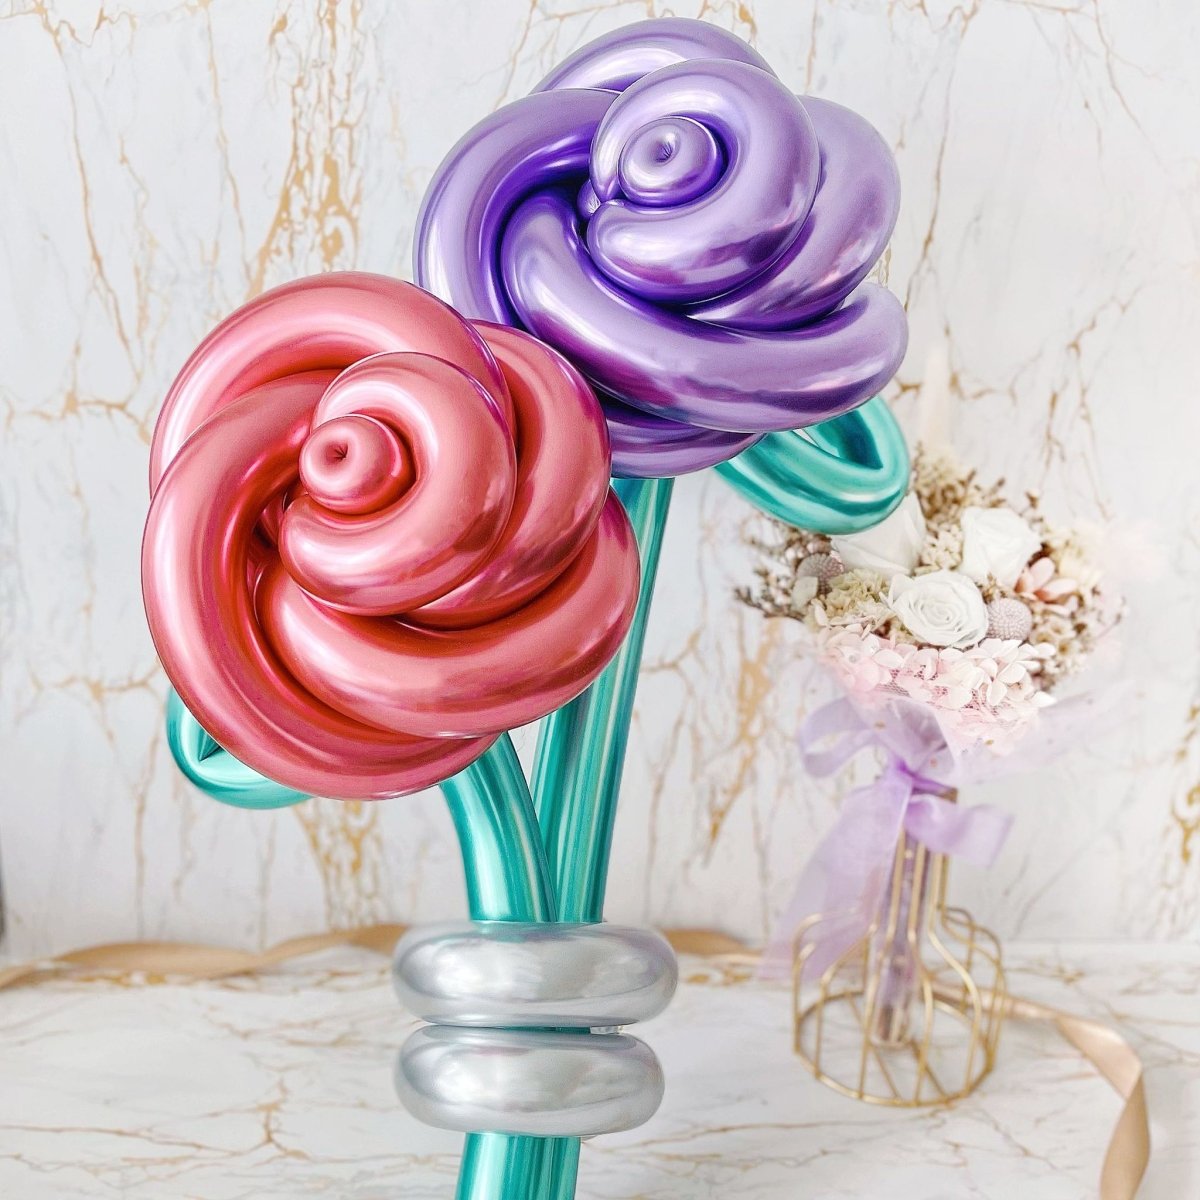 Luxurious Jumbo Rose Balloon Flower Bouquet - Rainbowly Fresh Fruit Gift and Flower Arrangments